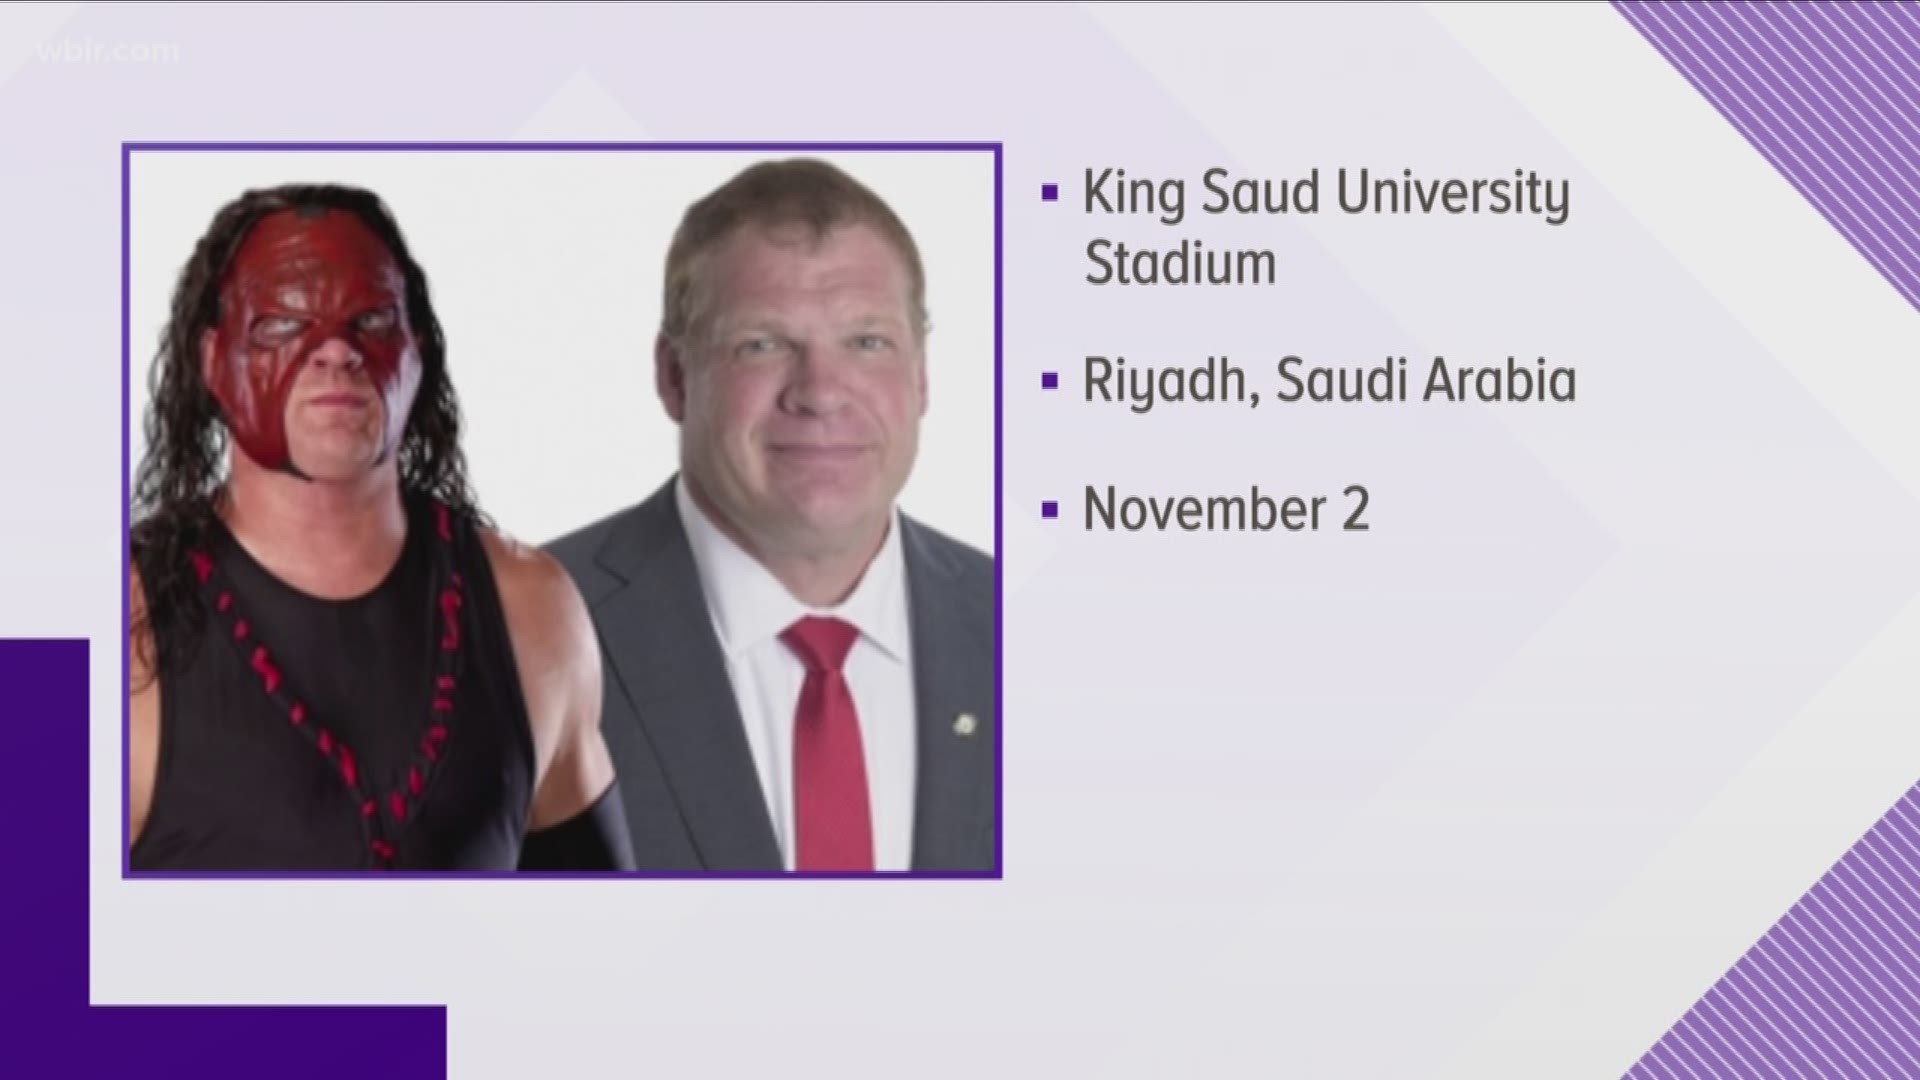 Knox County mayor Glenn Jacobs is headed to Saudi Arabia next month as his WWE character Kane.